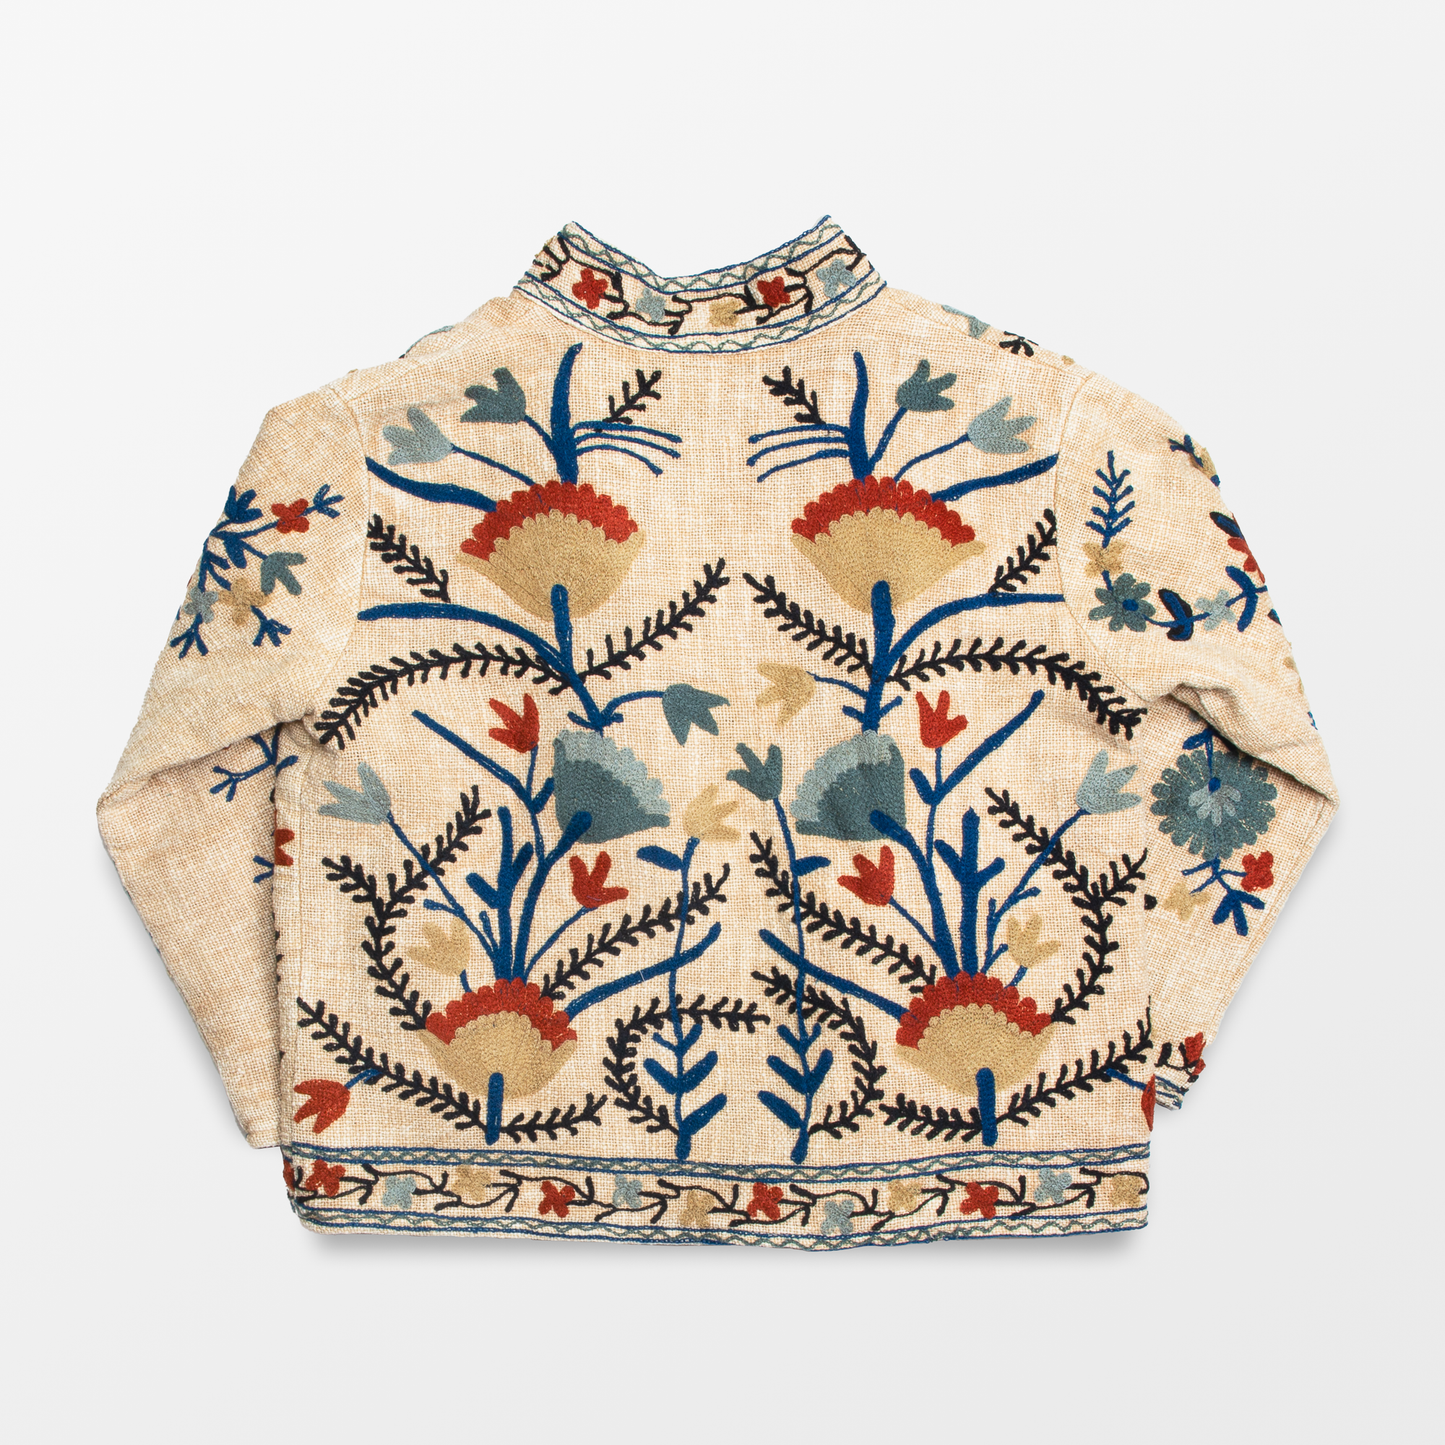 Floral Embroidered Jacket - Tan & Blue